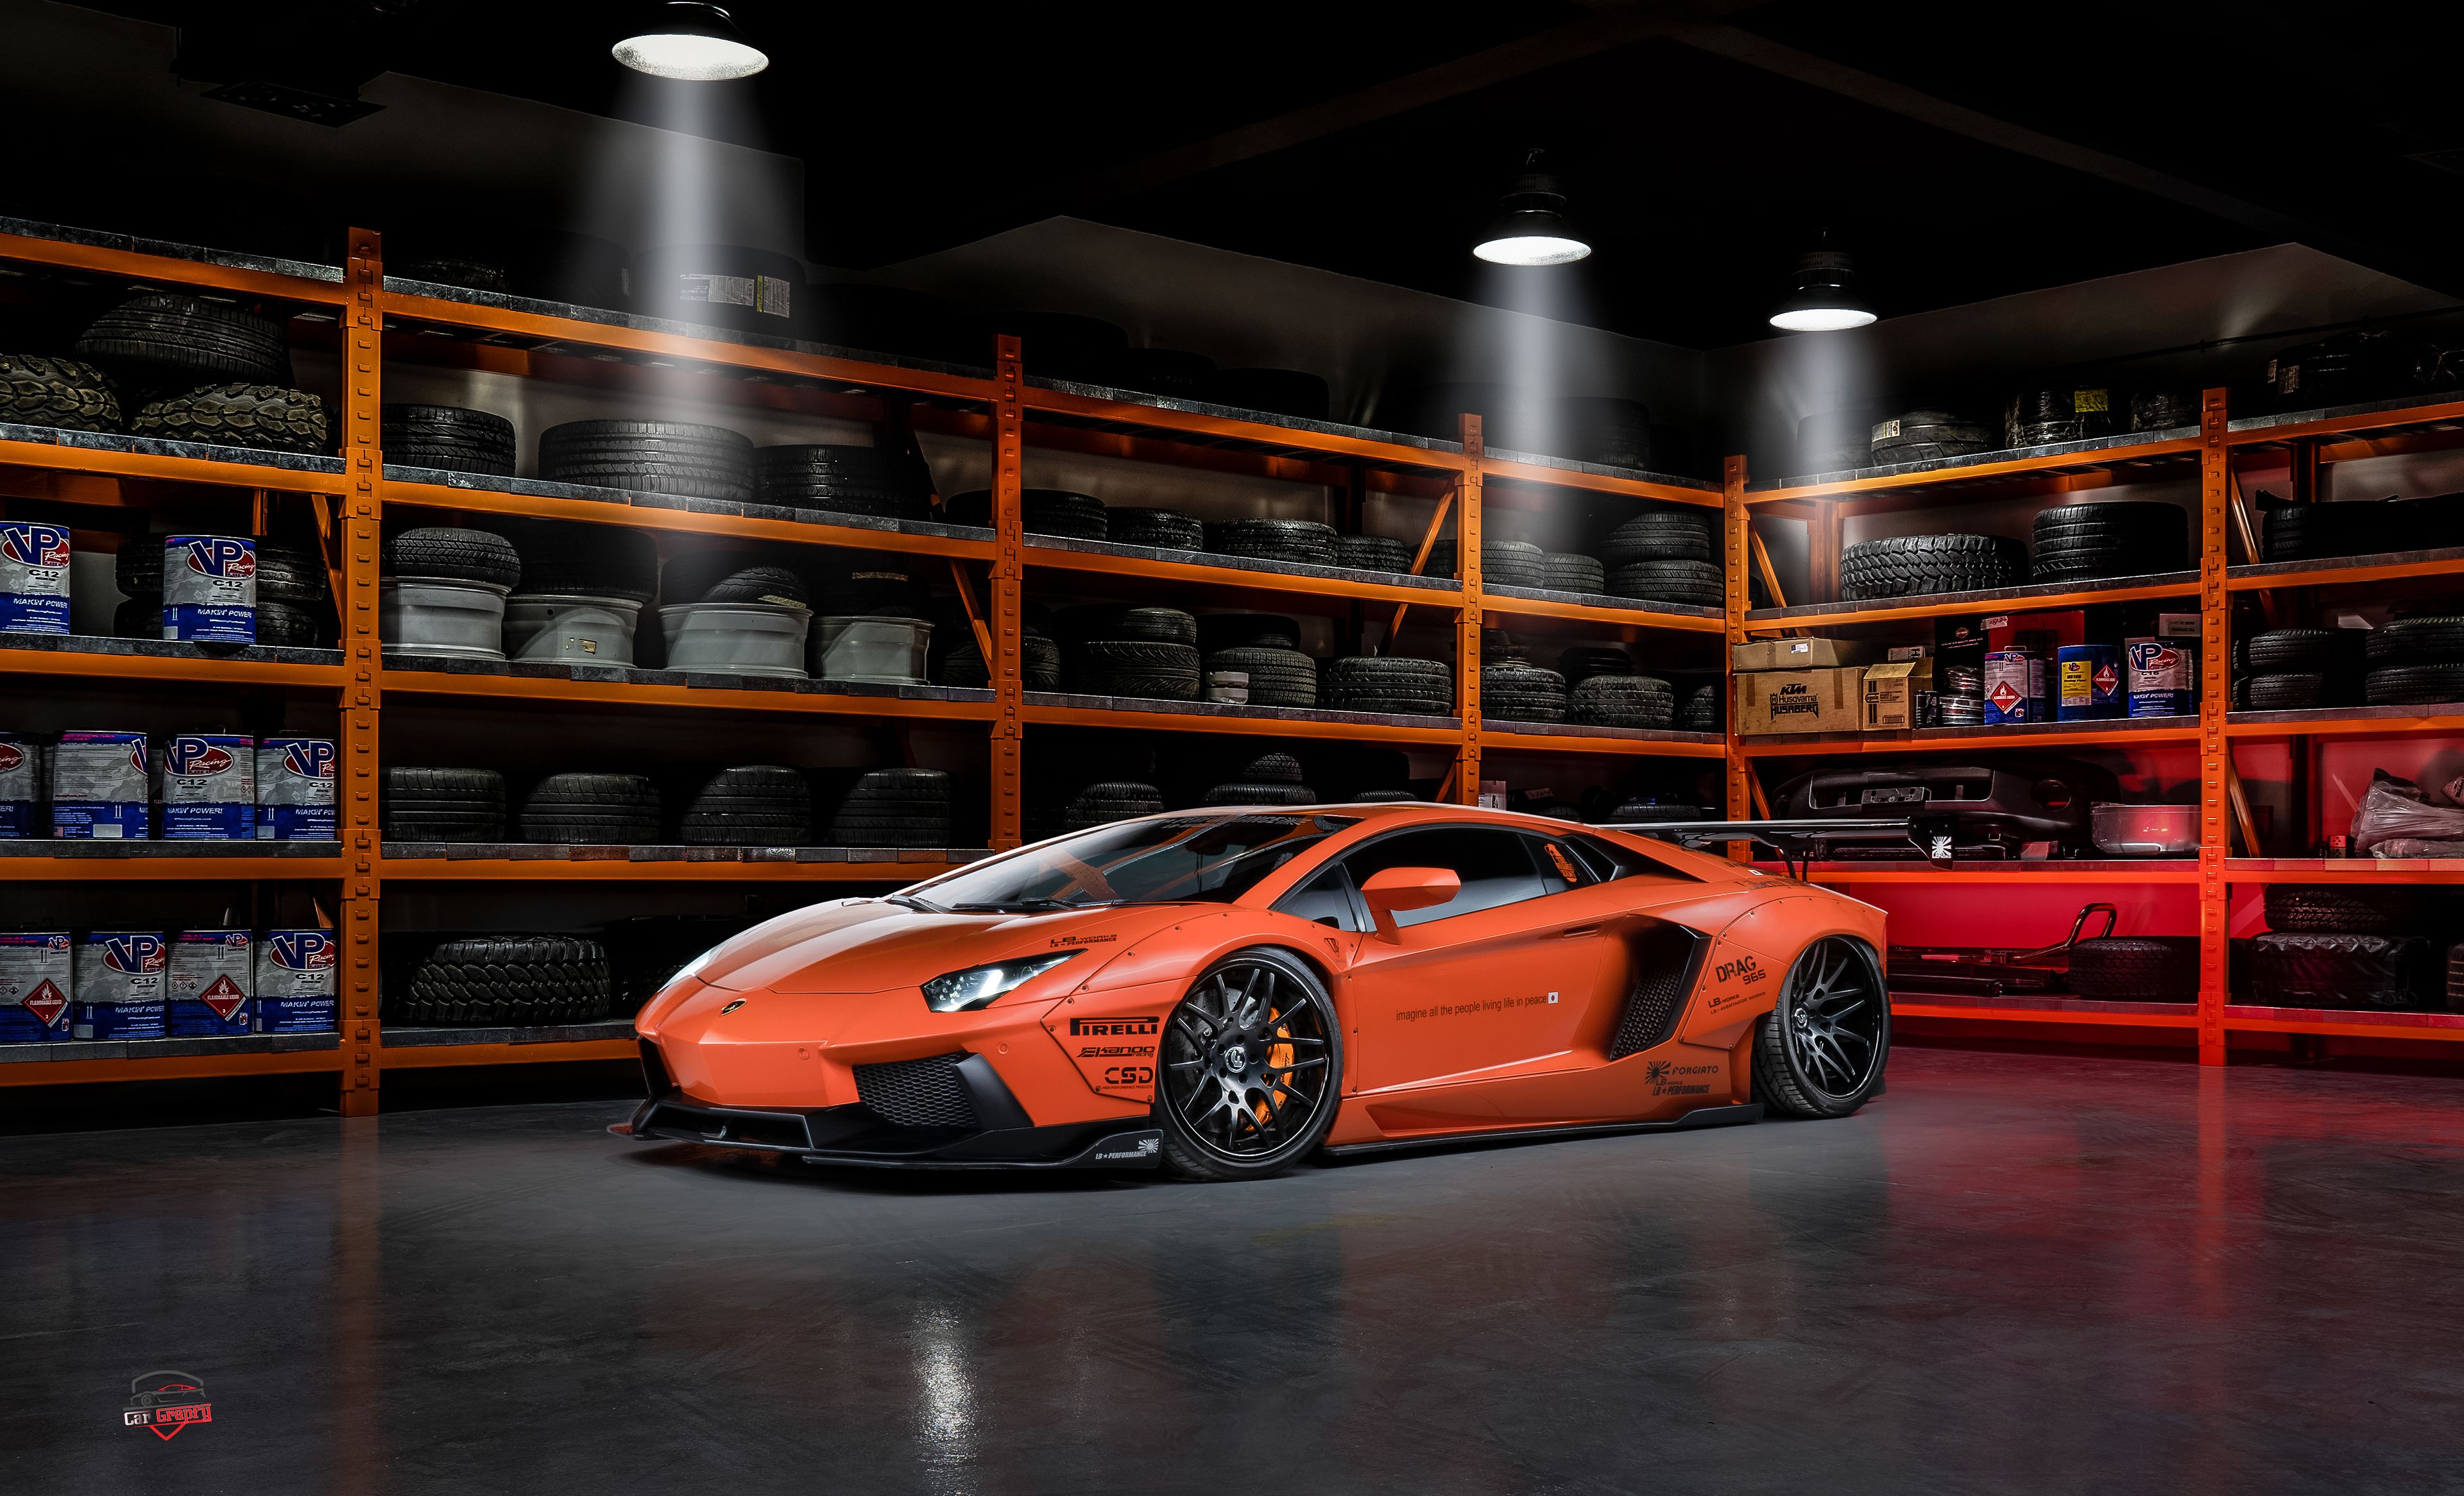 Orange Lamborghini 4k, HD Cars, 4k Wallpaper, Image, Background, Photo and Picture